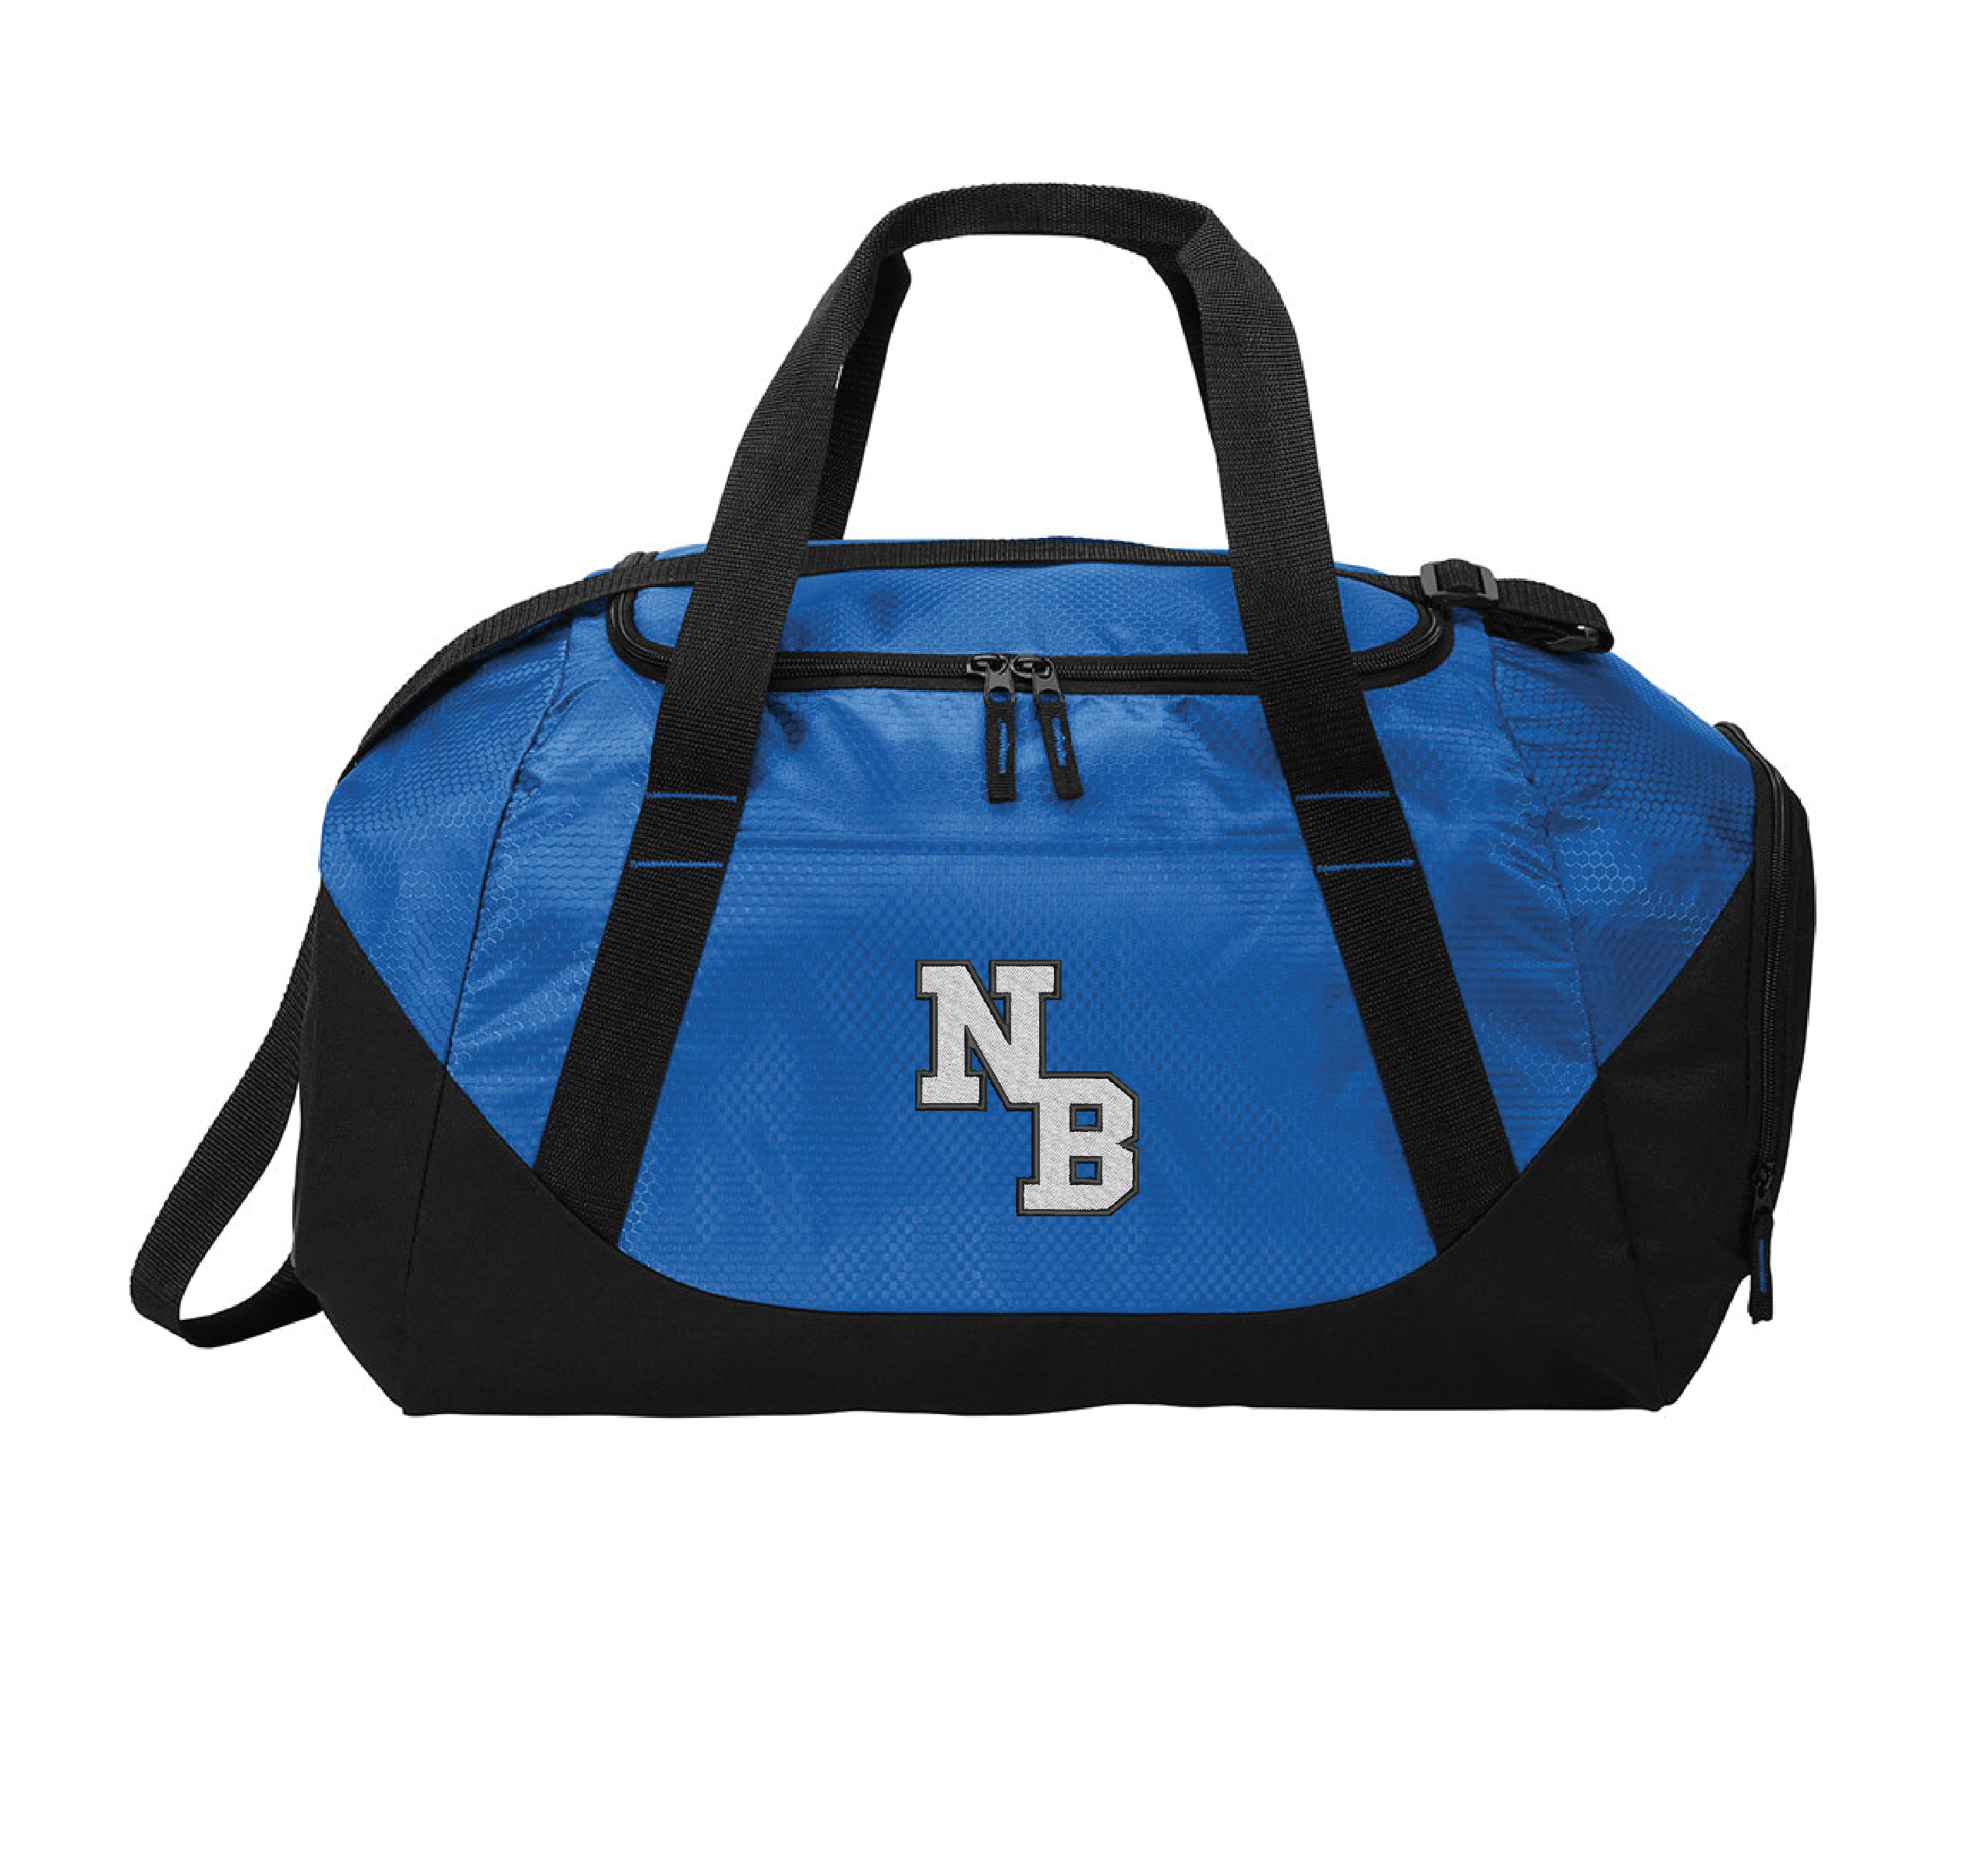 NB Duffle Bag